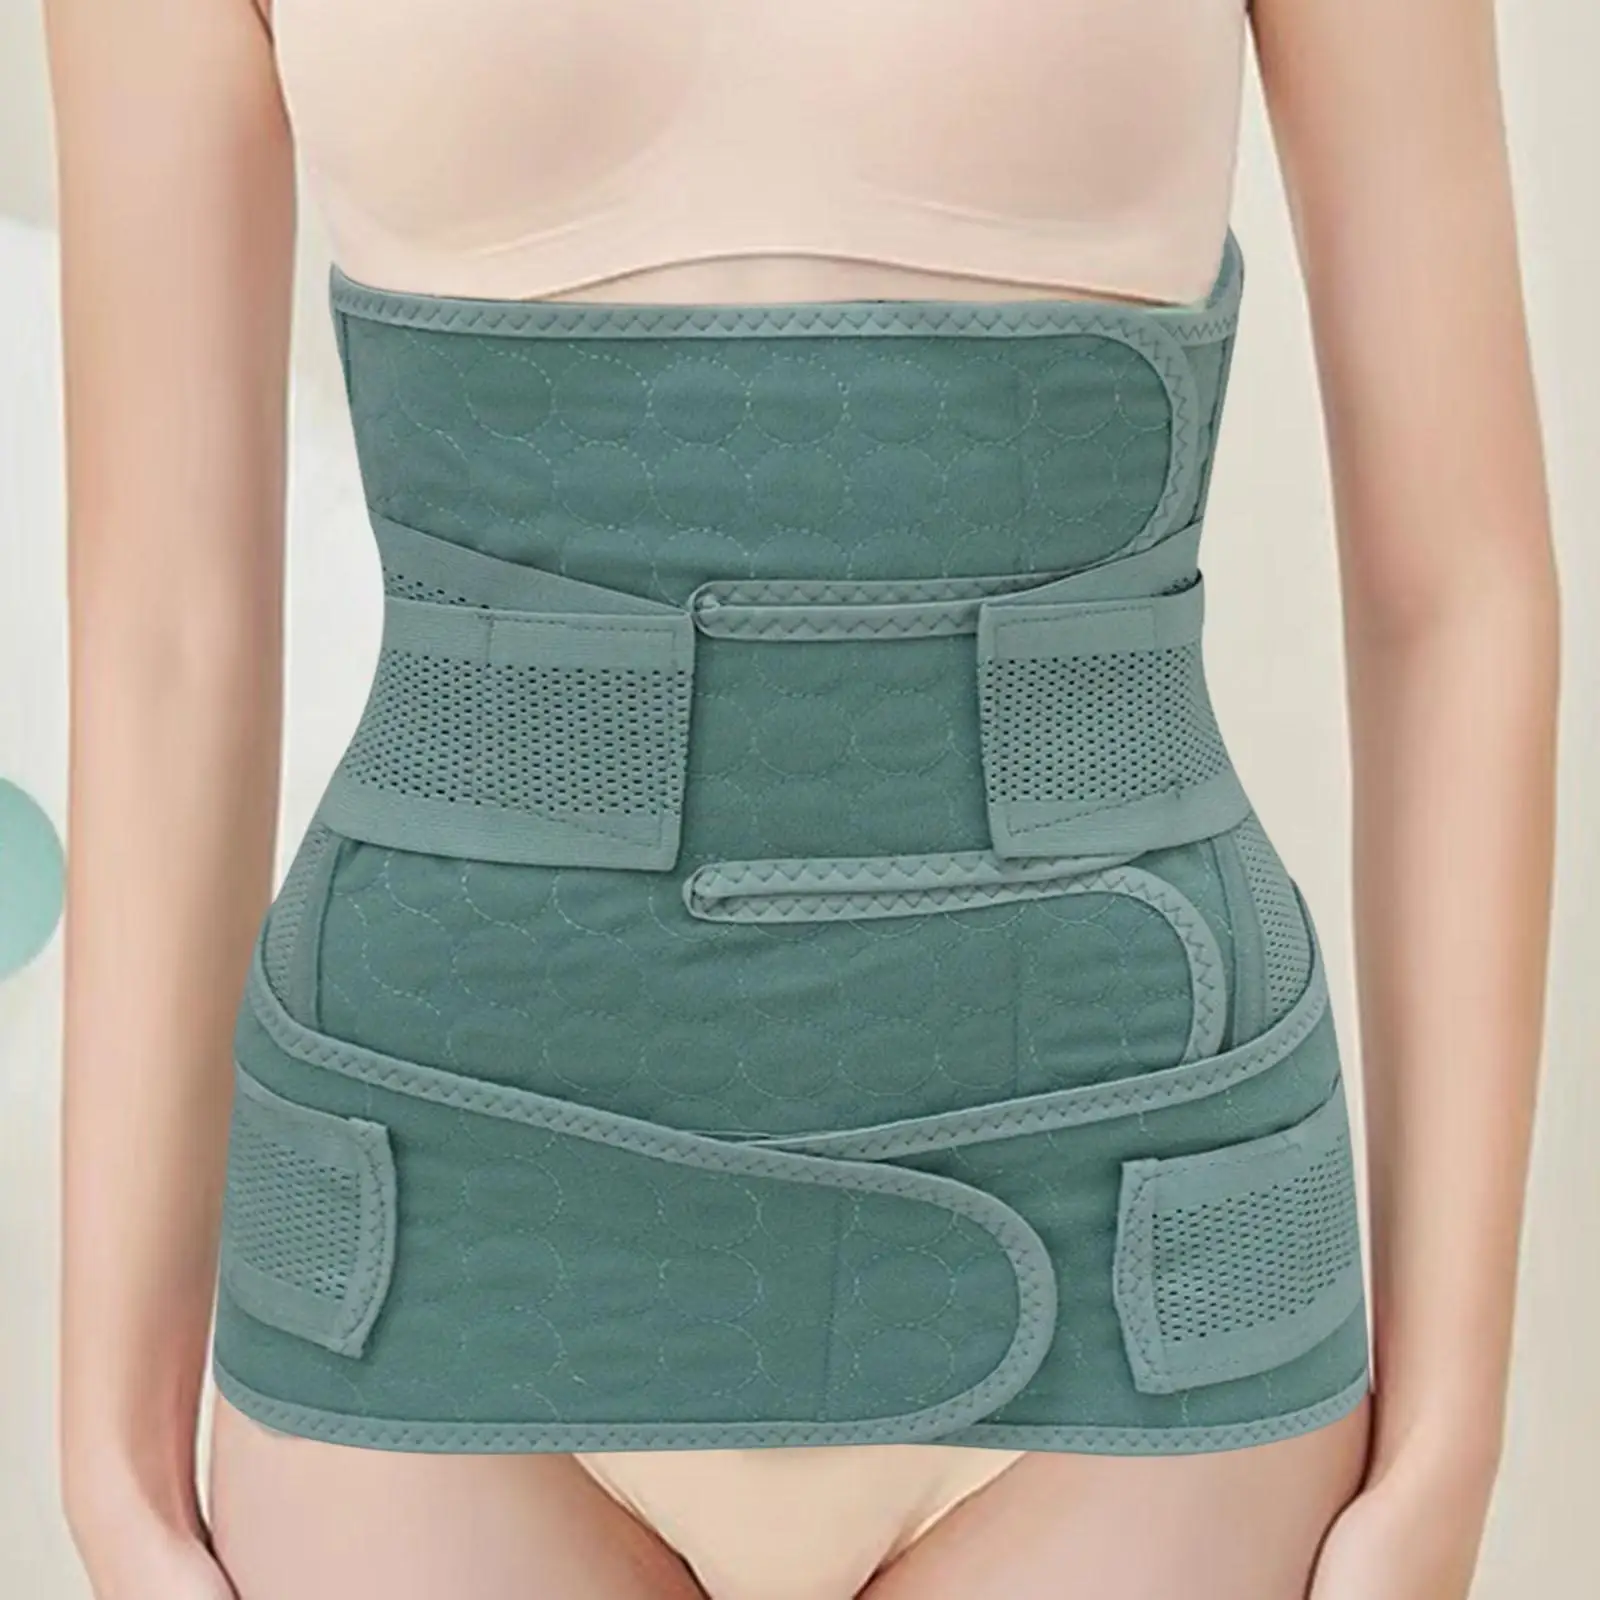 Strechy Postpartum Support Post Maternity Belt Belly Wrap Girdle for Rest